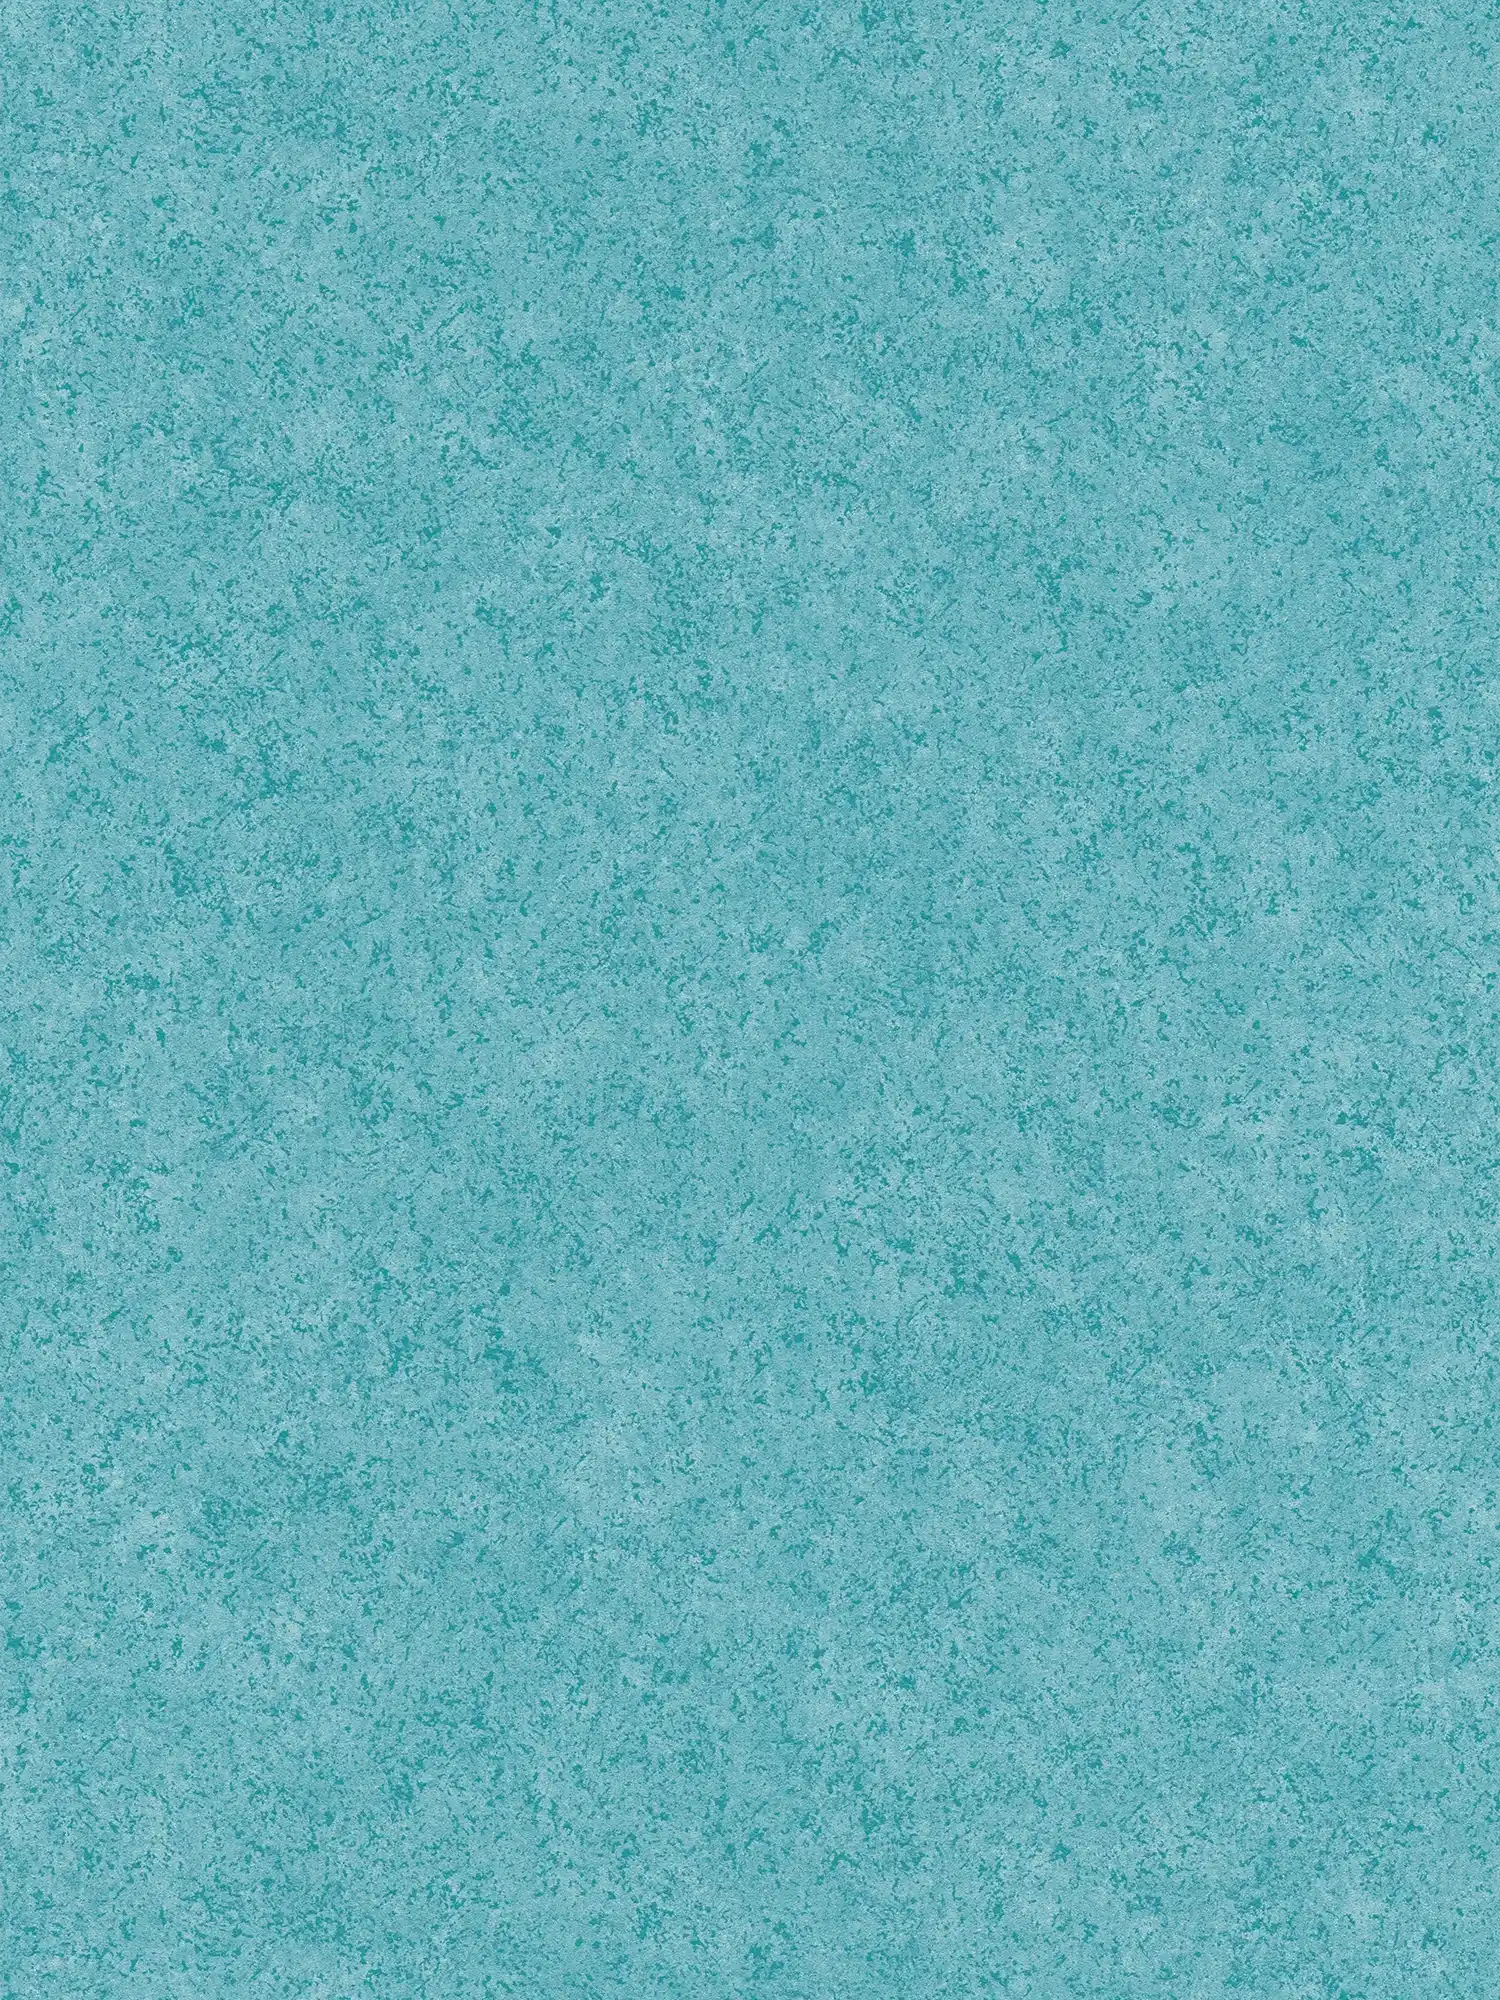 Vliesbehang petrol gipslook met mat patroon - blauw, groen
